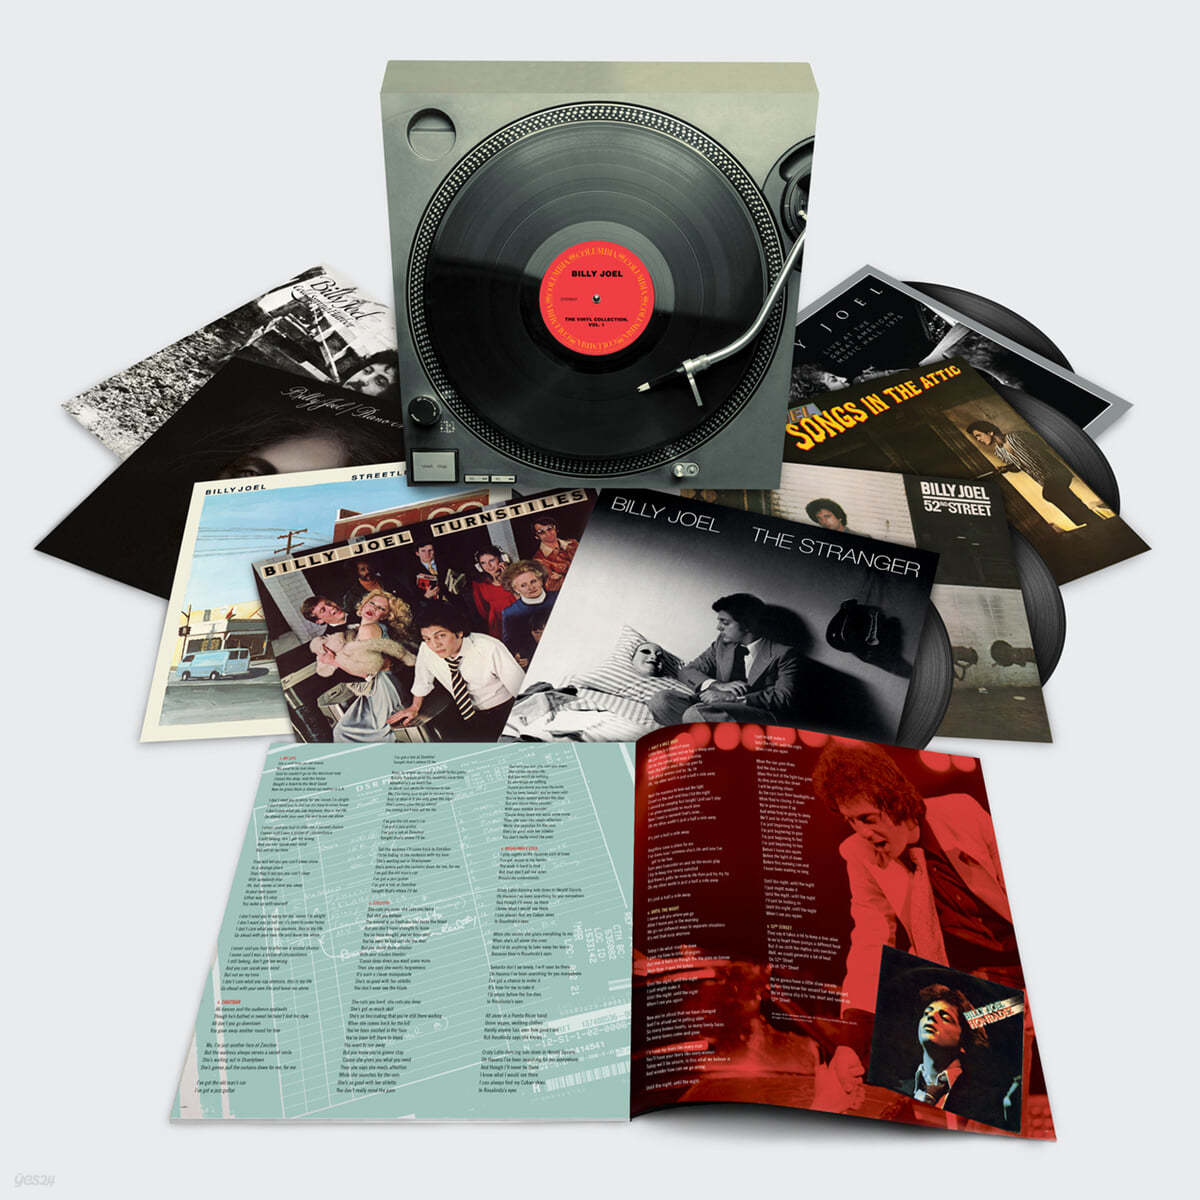 Billy Joel (빌리 조엘) - The Vinyl Collection, Vol. 1 [9LP] 